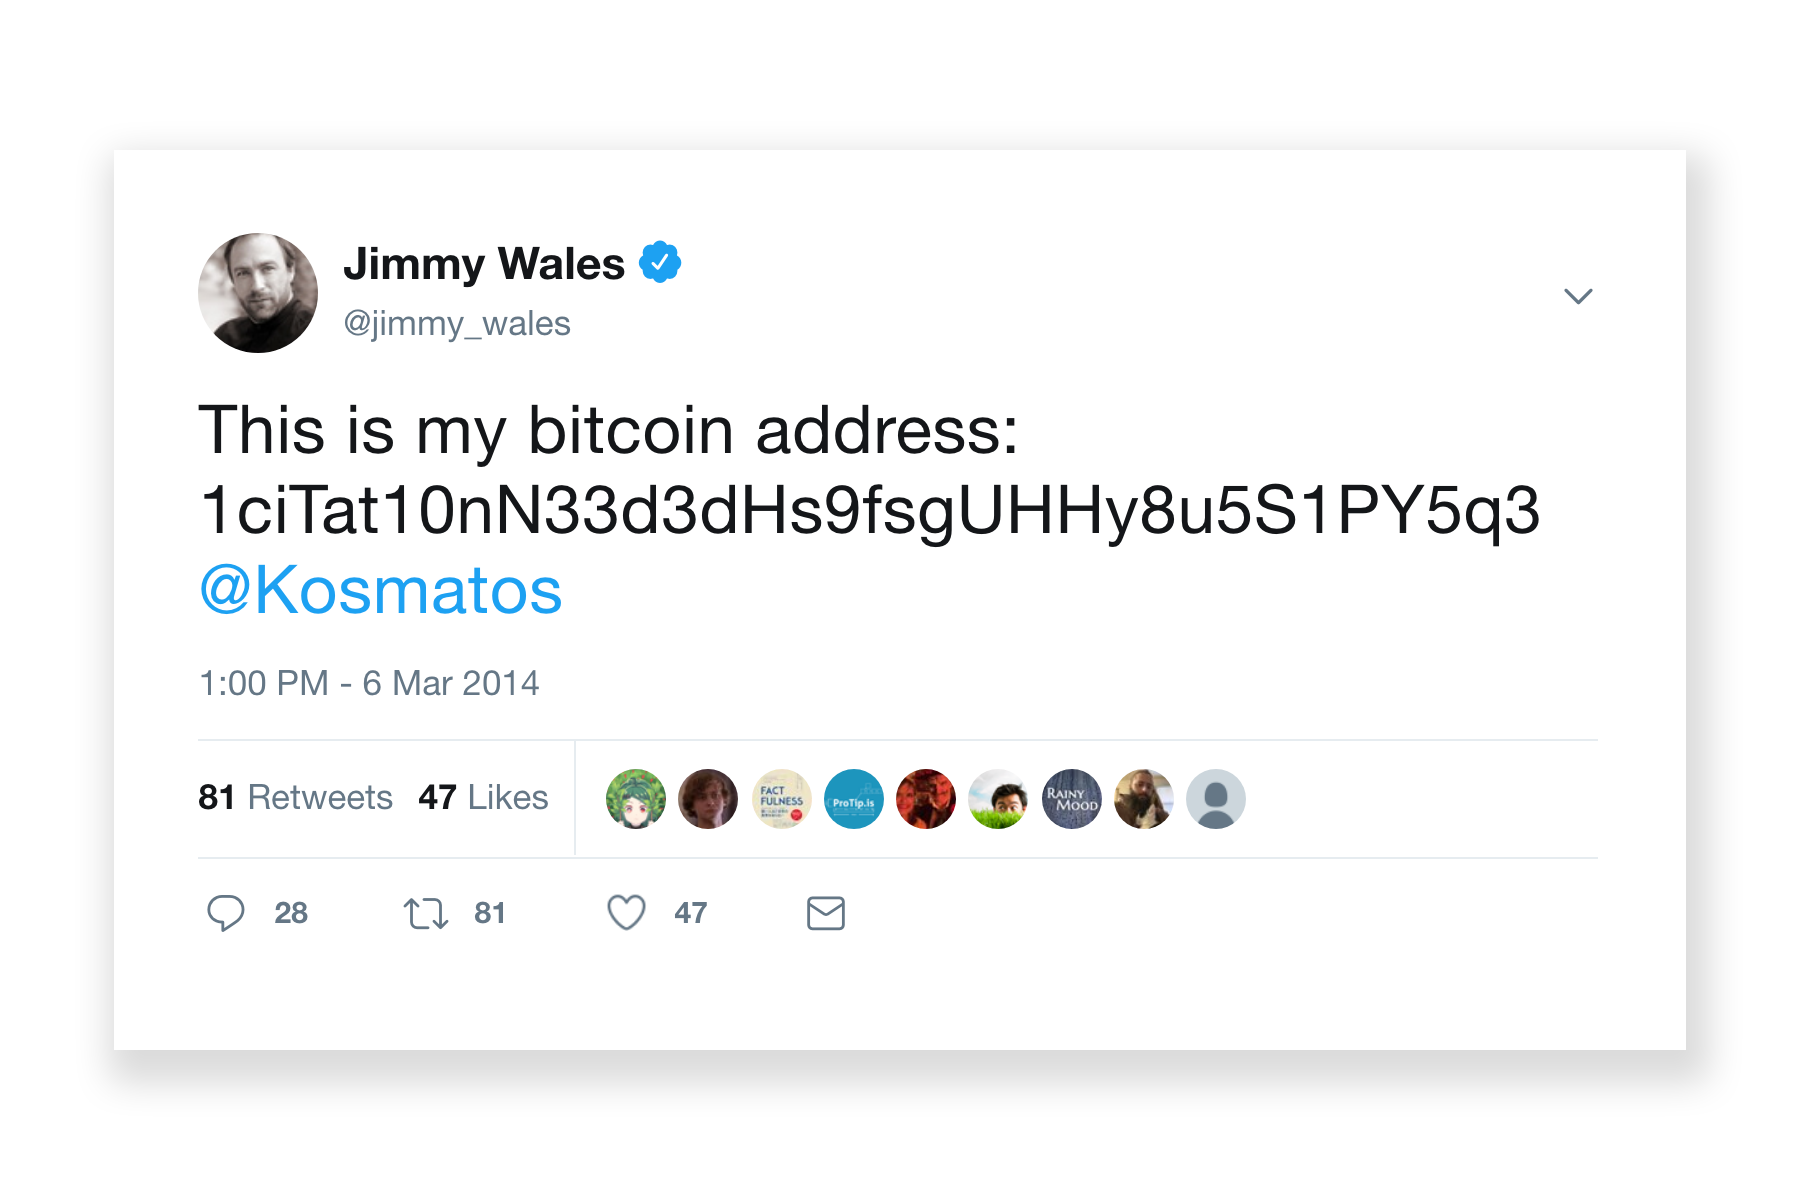 Jimmy Wales tweeting his Bitcoin address